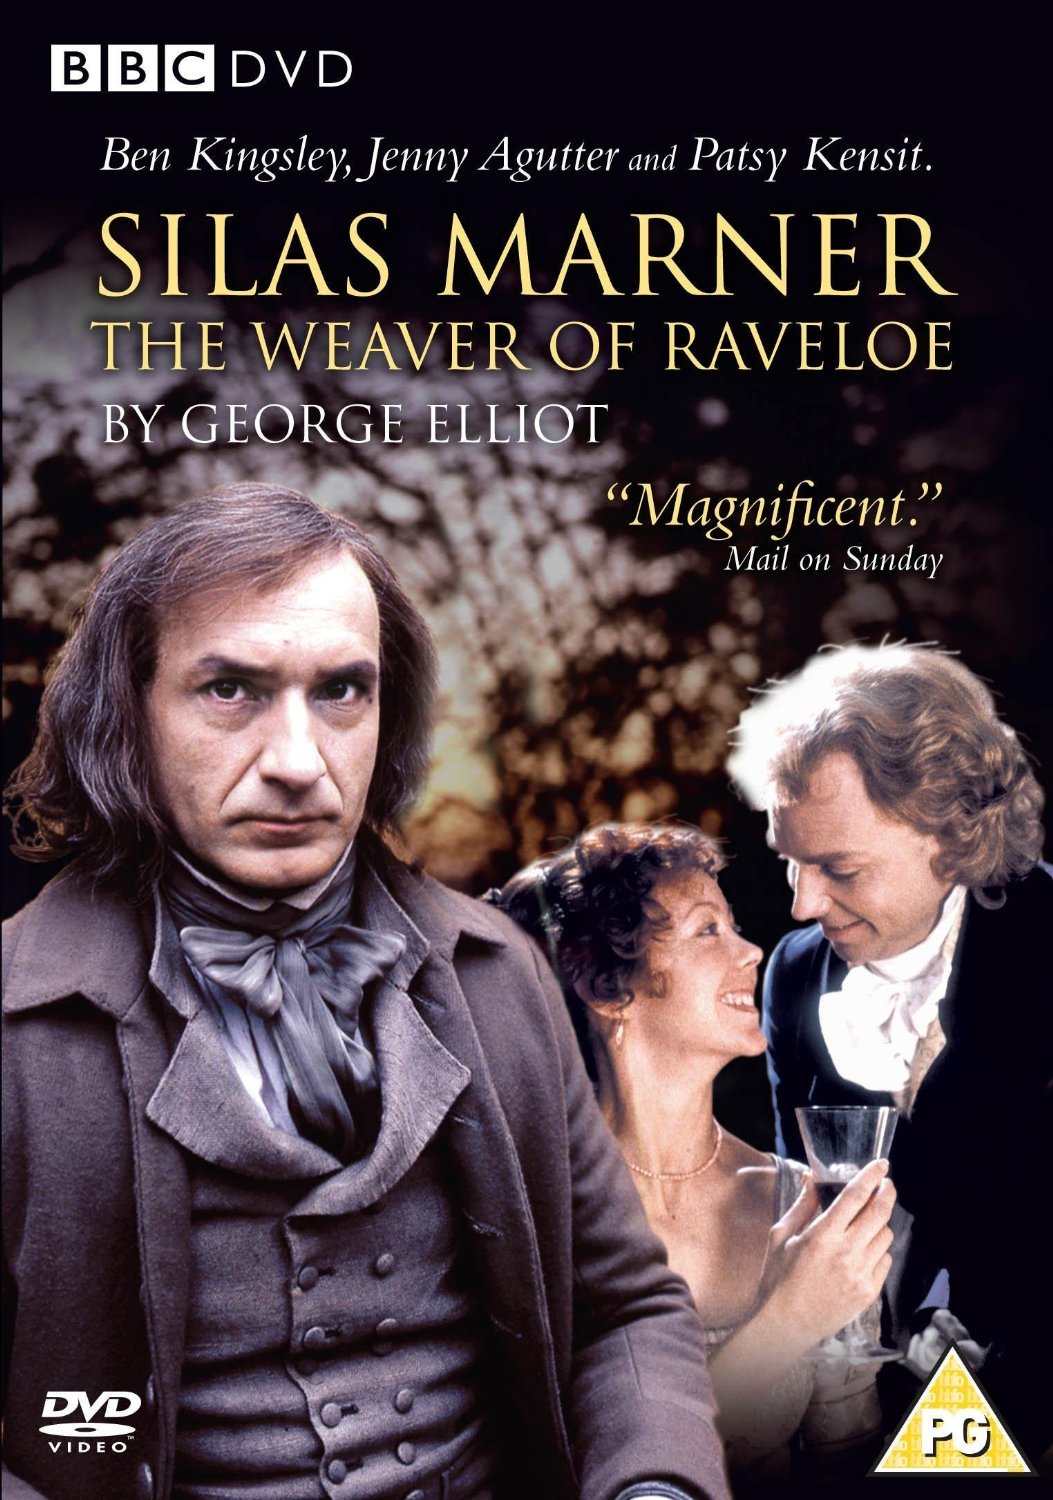 silas marner (1985)dvdplanetstorepk